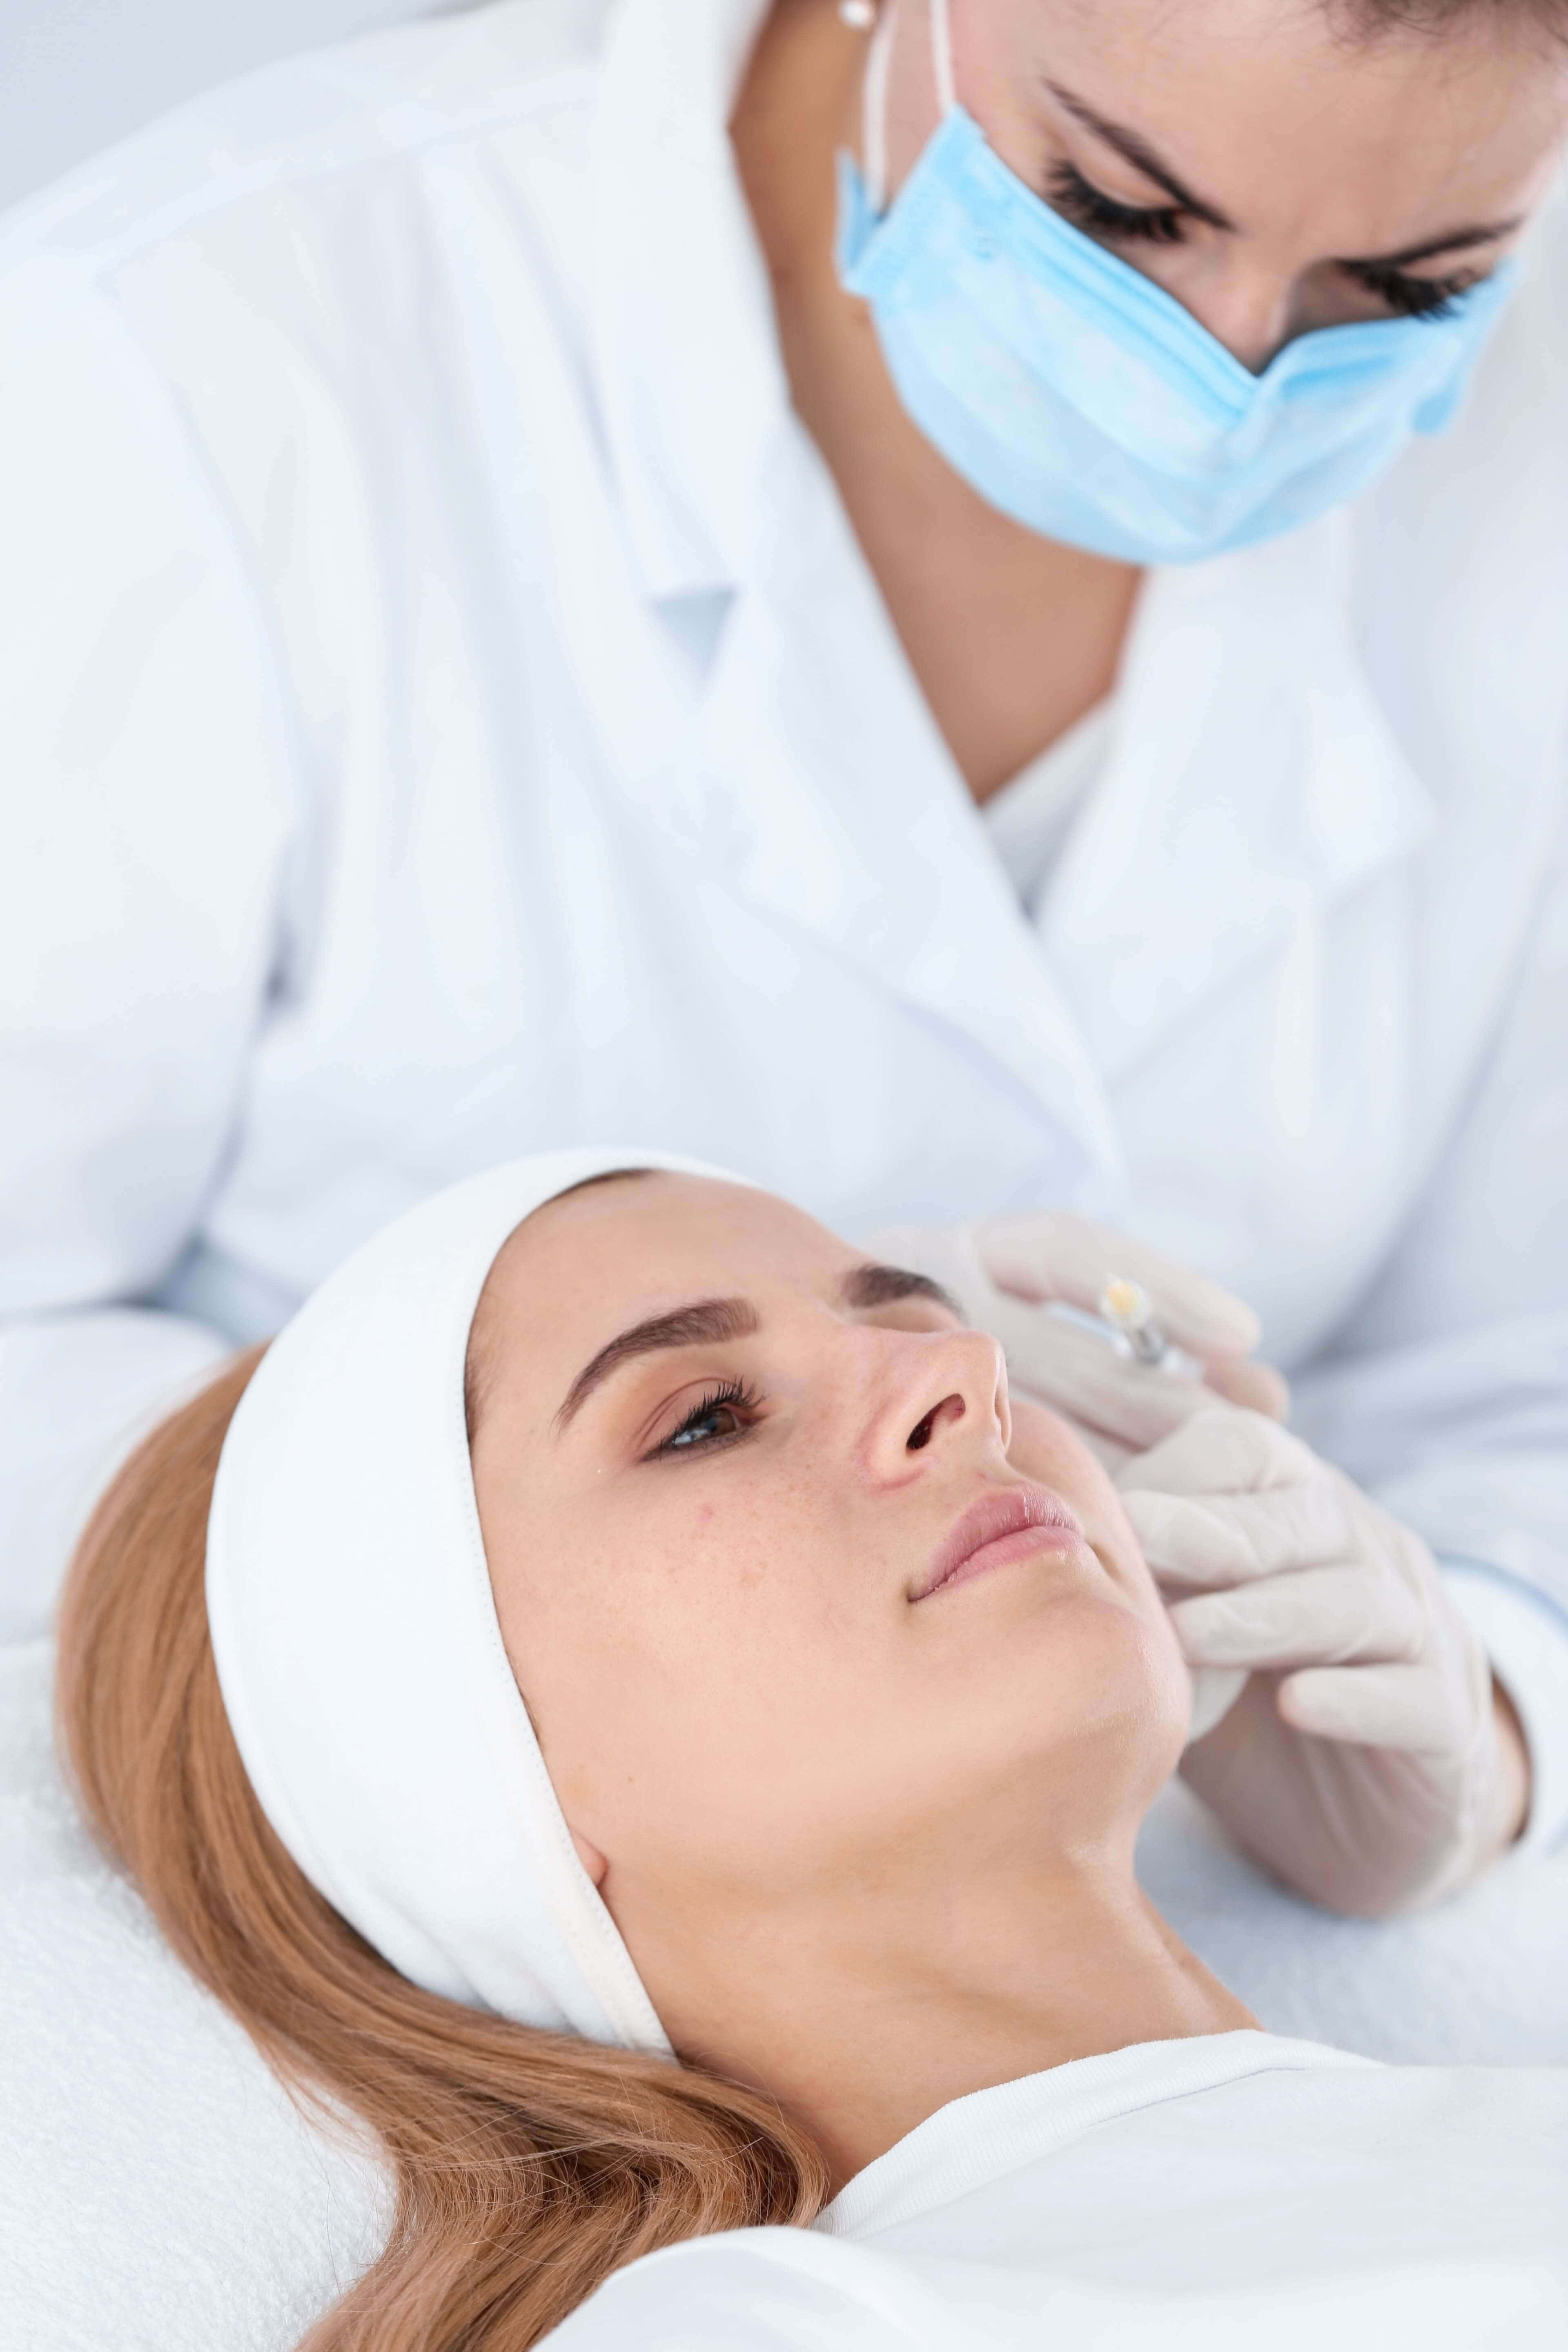 A patient receives Radiesse dermal filler in her face